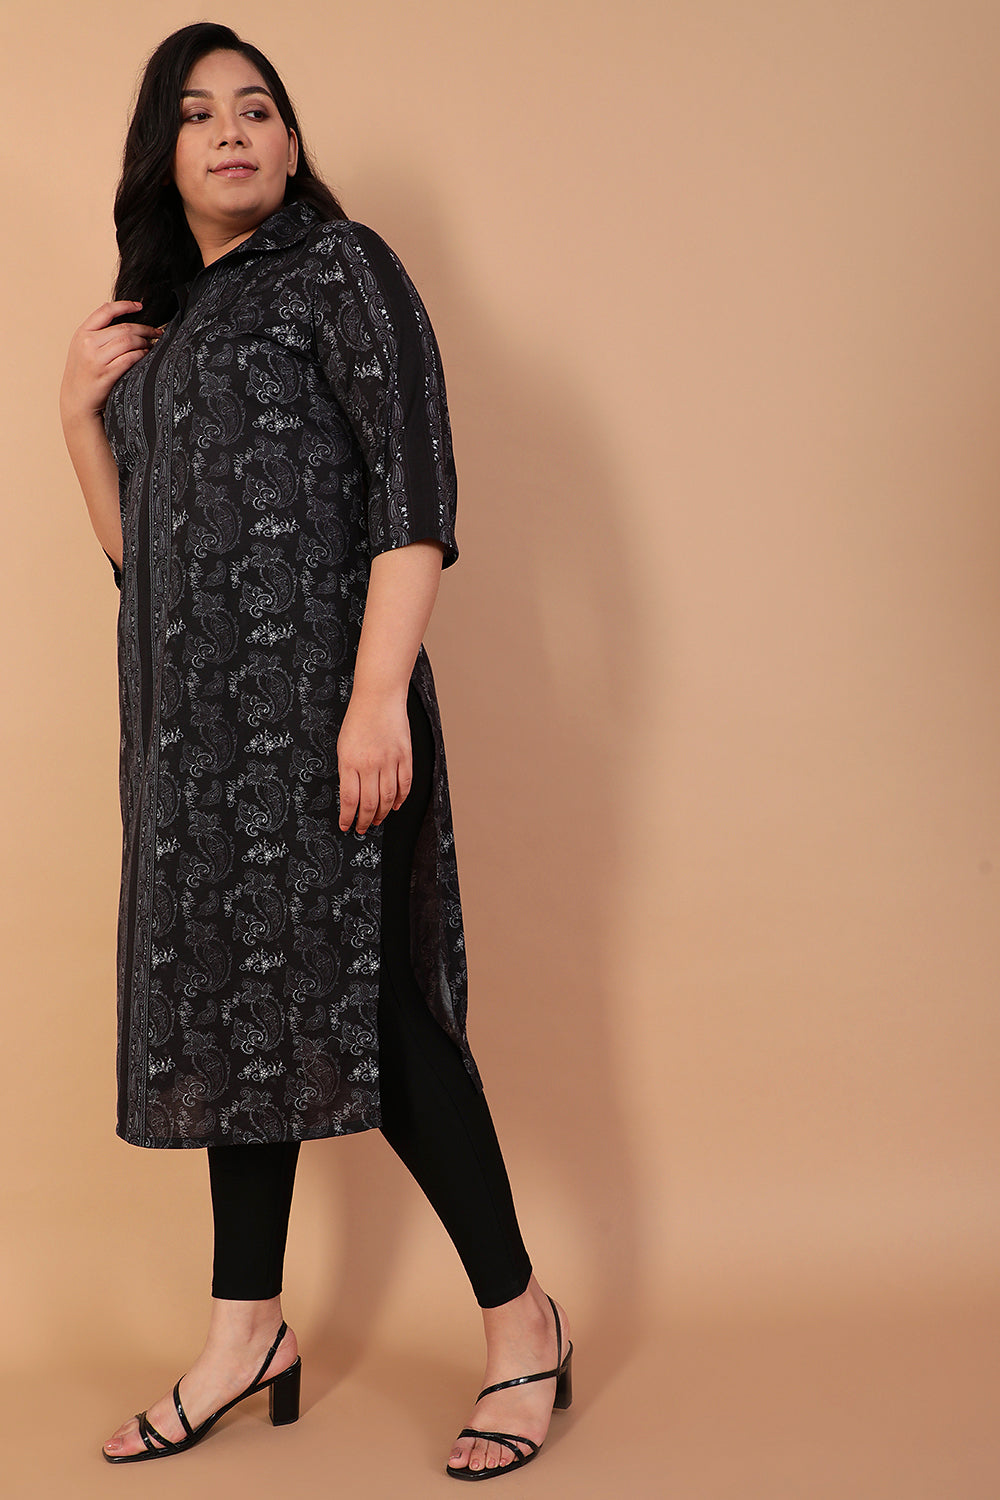 Cotton Embroidered Net Work Black Kurti For Women Indian Stylish Summer  Shirt, | eBay